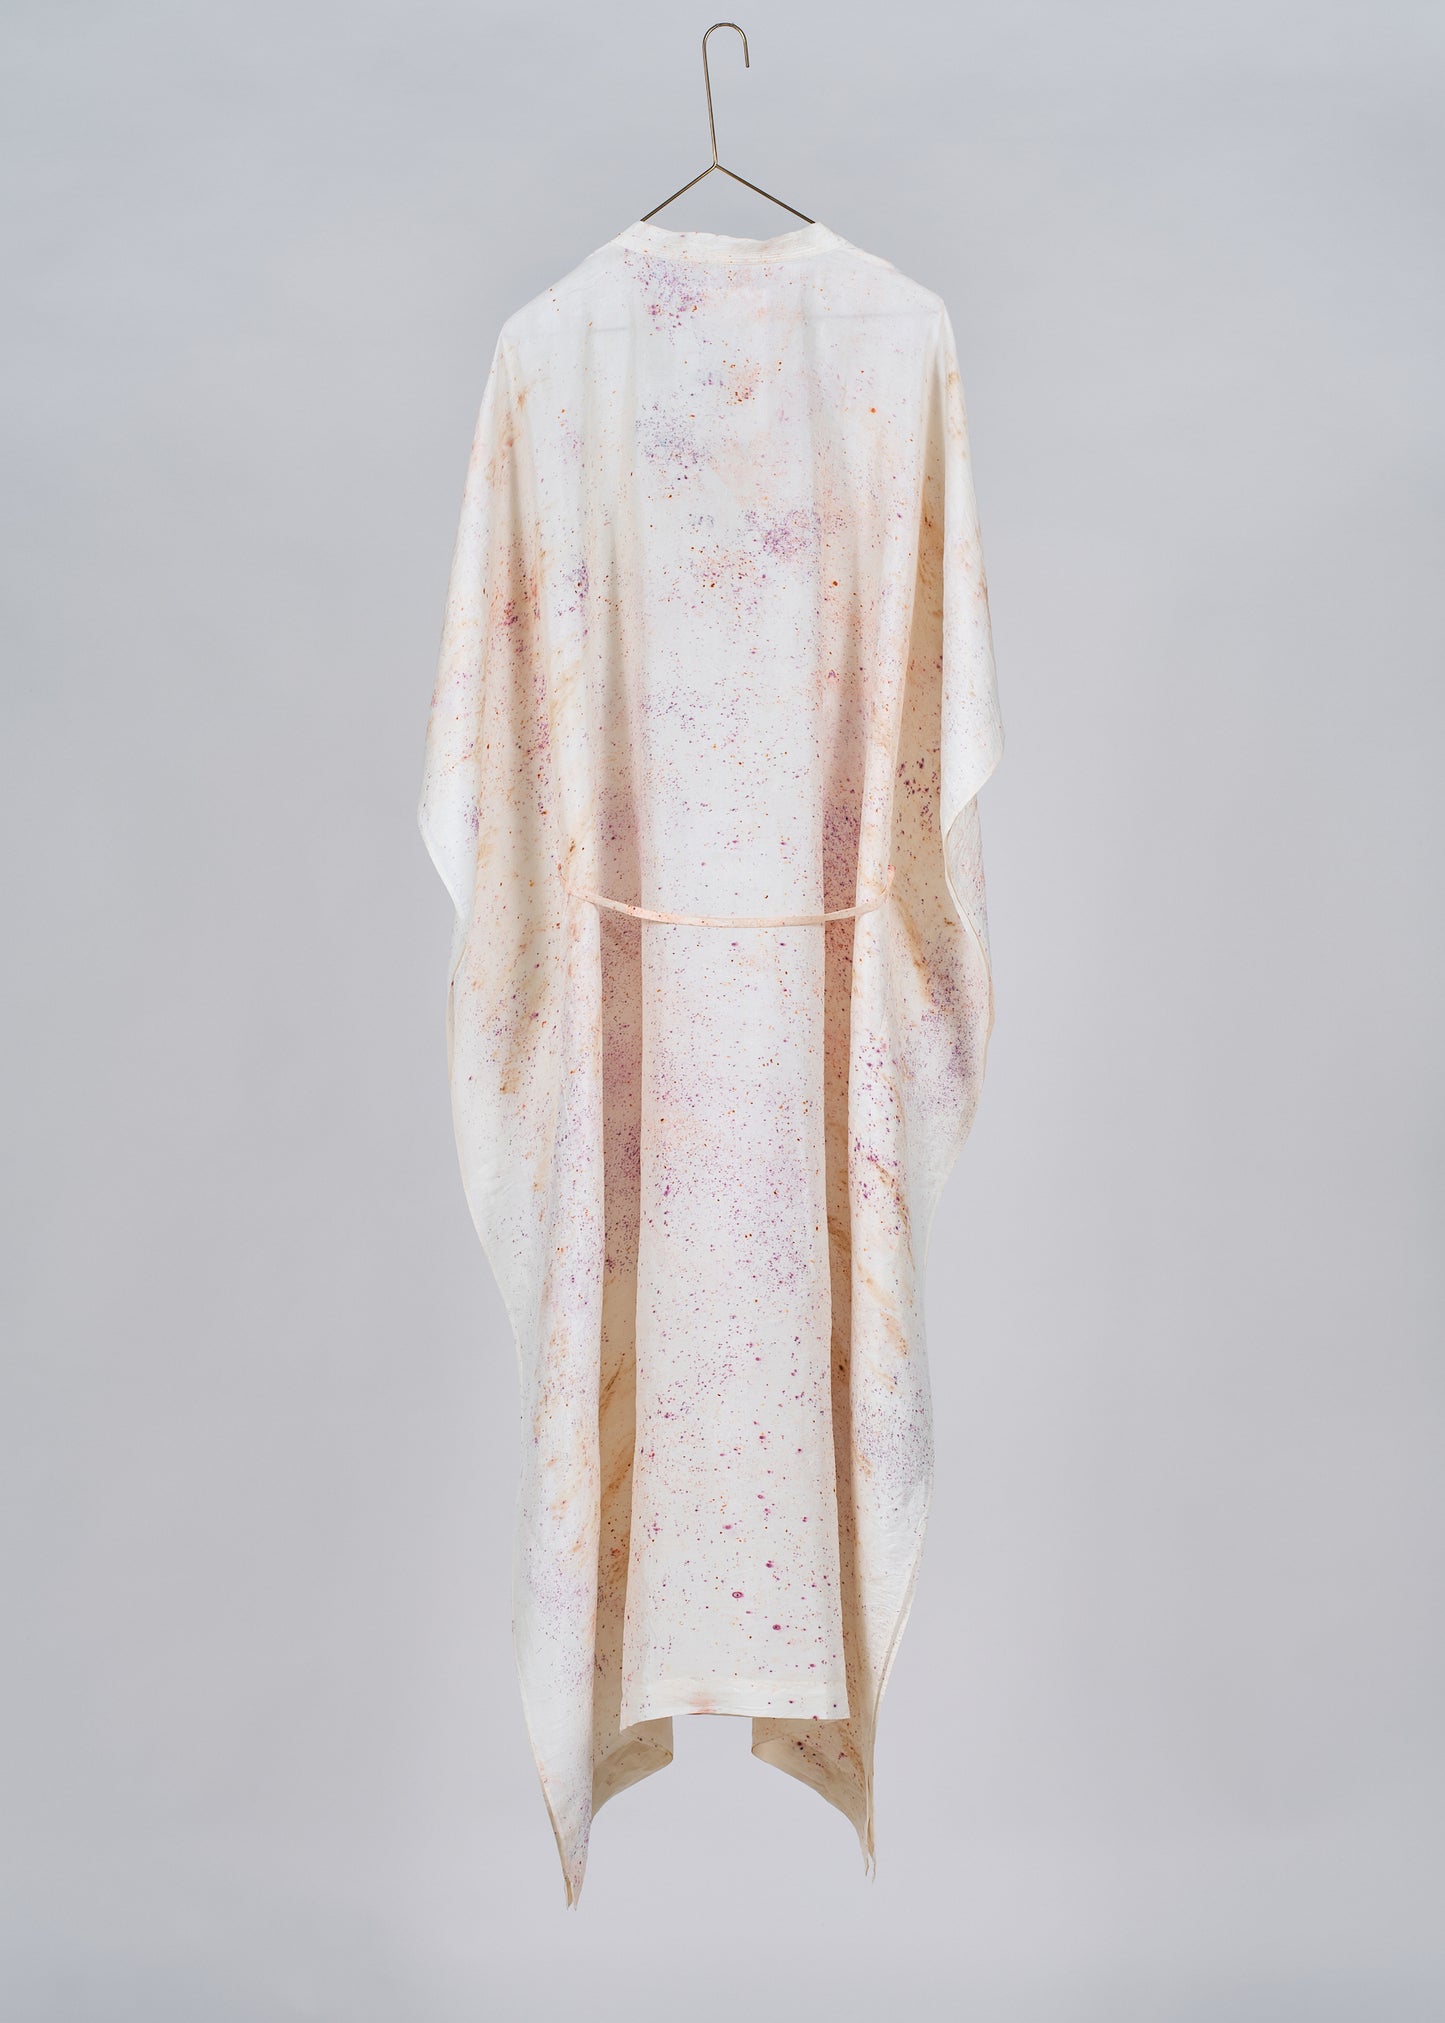 HEGO DYE / handloom silk | JAPONAISERIE＃3